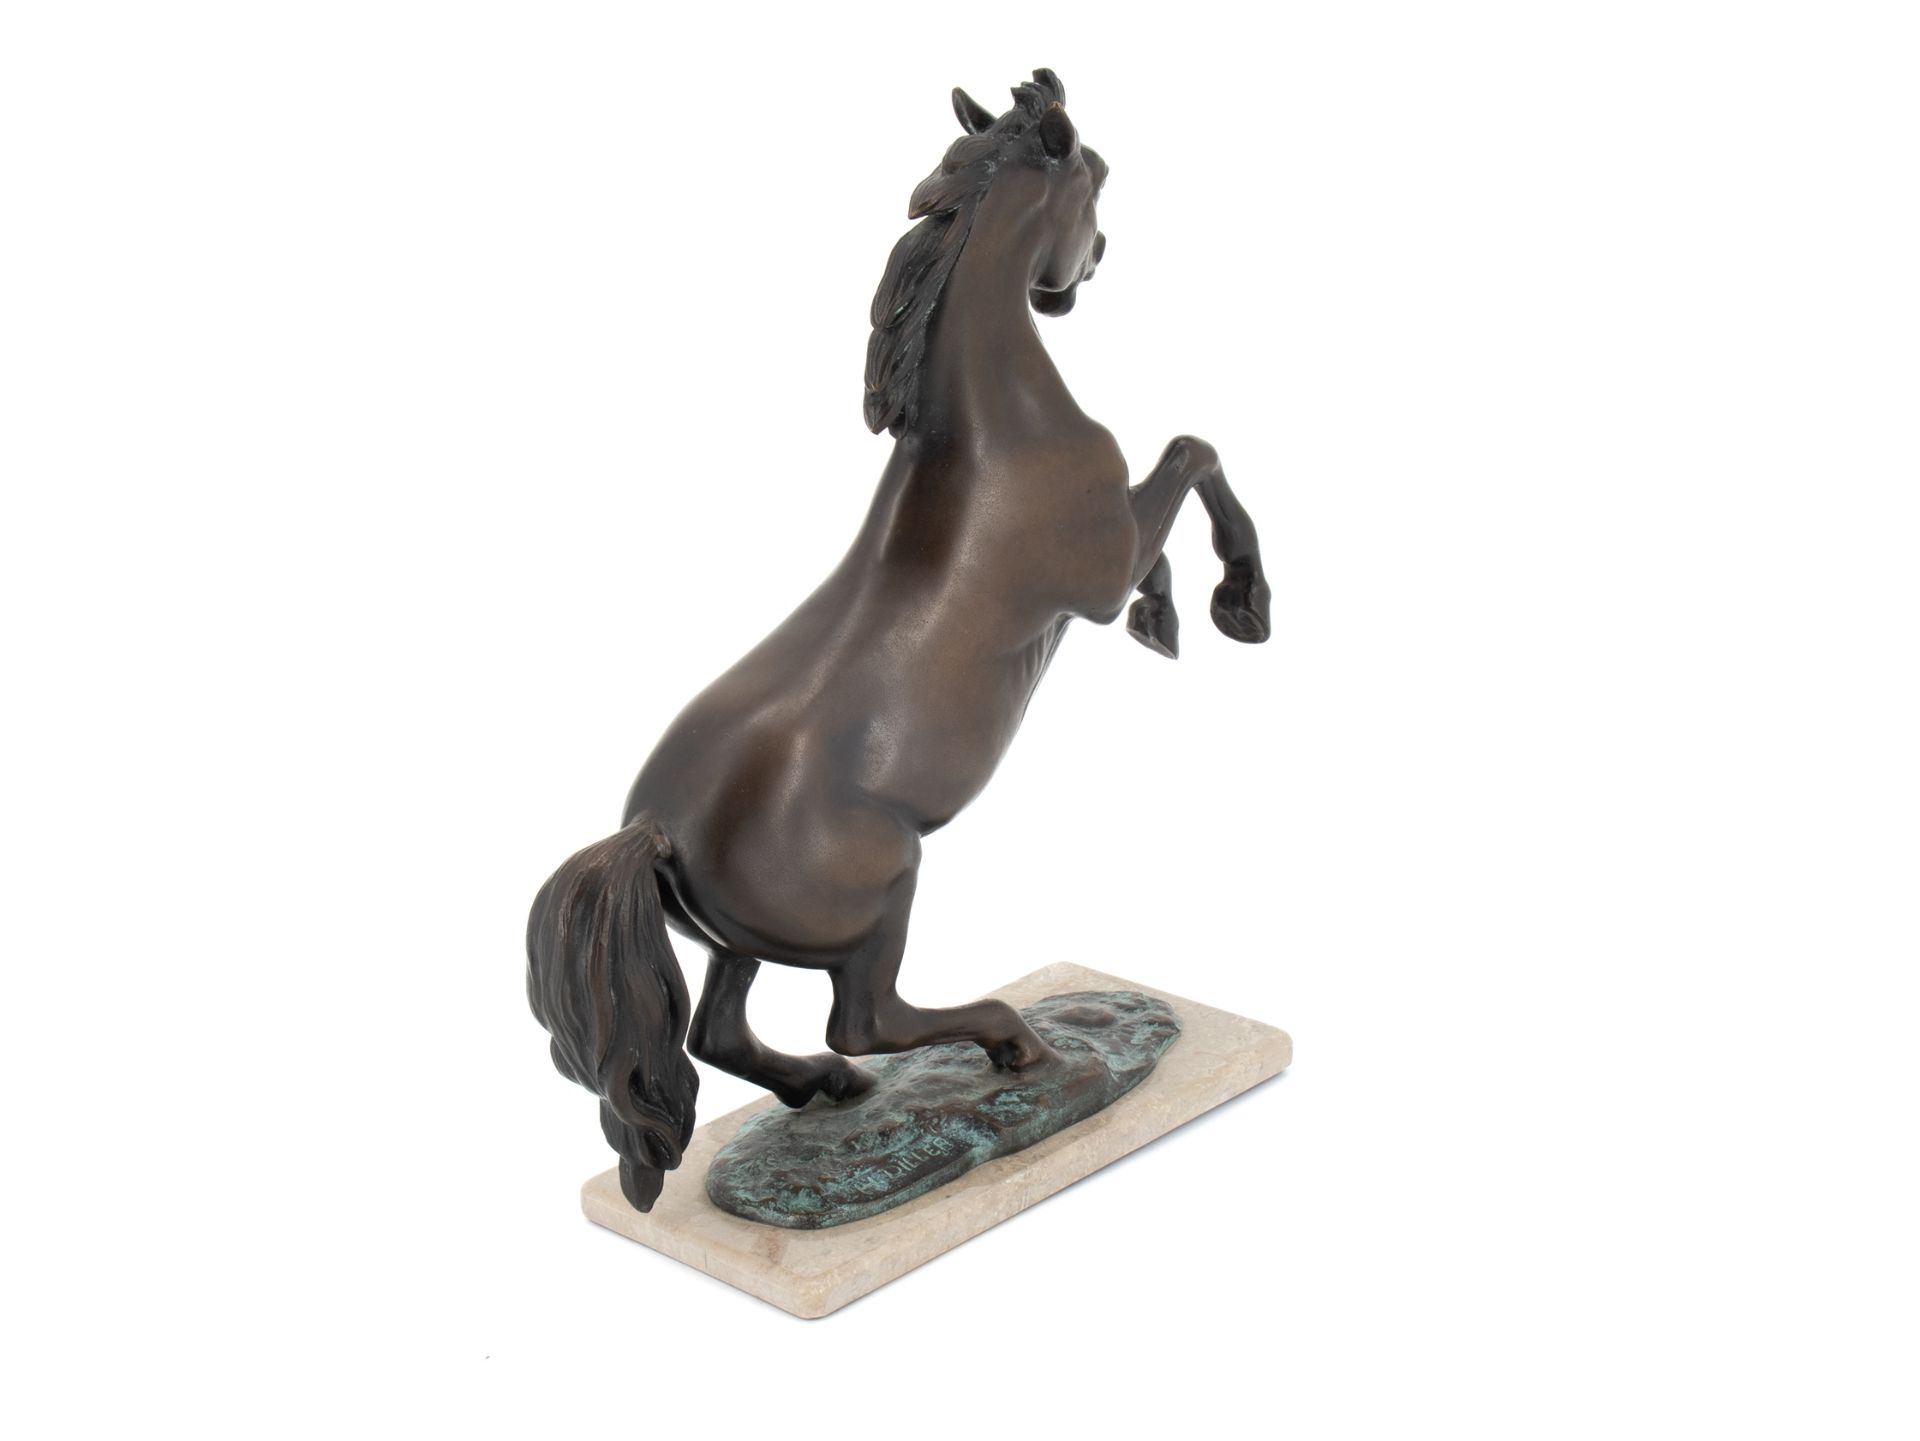 Diller Helmut (1911 - 1984), Bronze sculpture "Steigendes Pferd" (Rising Horse) - Image 4 of 9